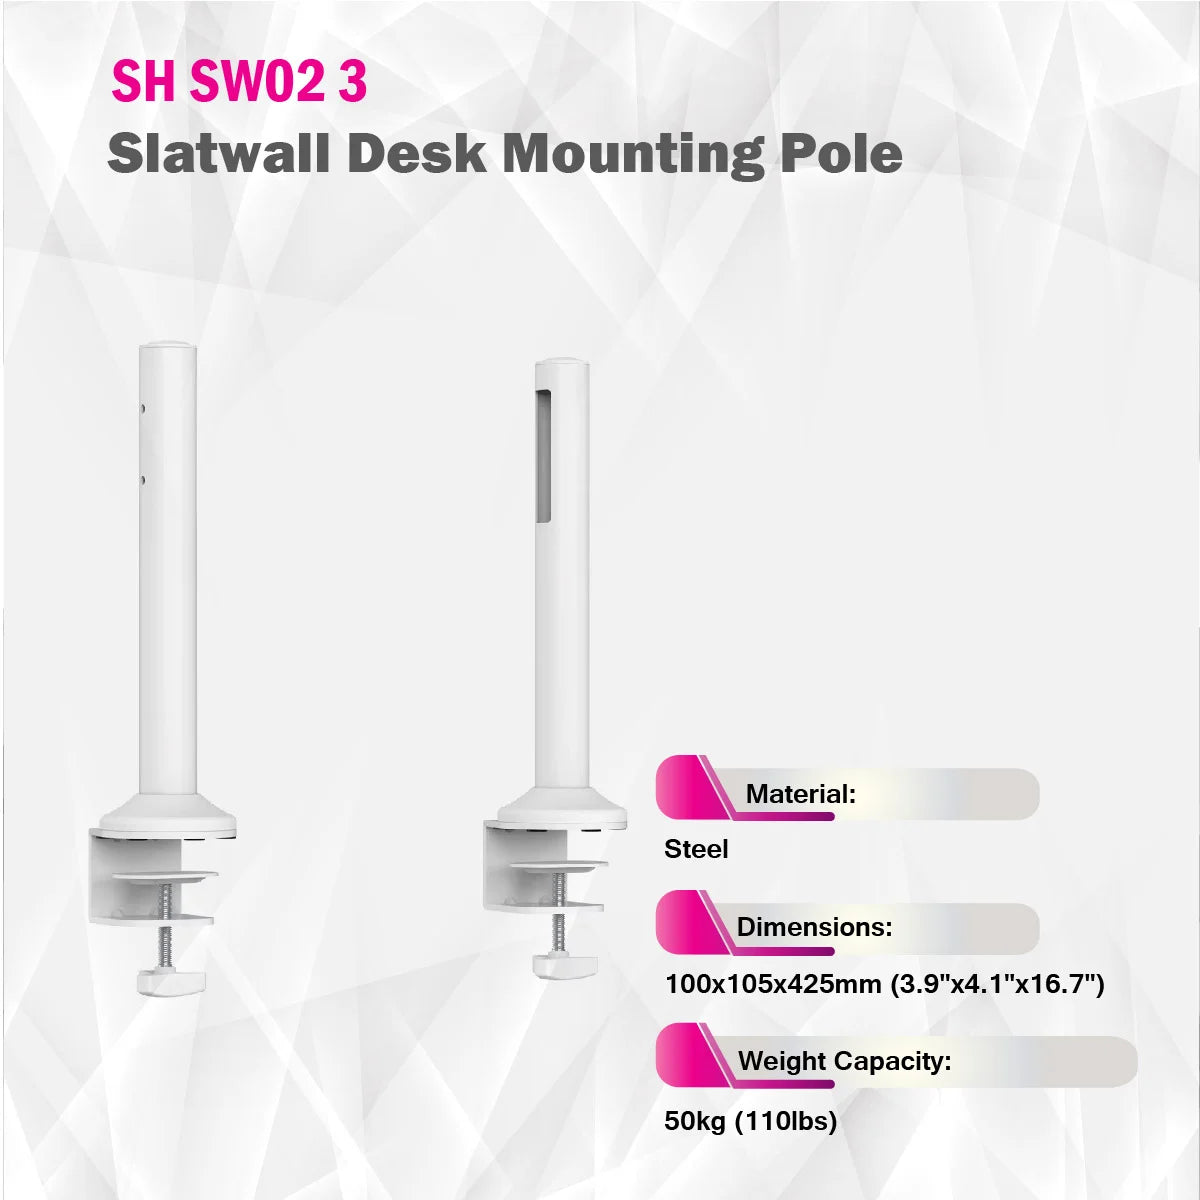 SkillTech -SH SW02 3 - Slatwall Desk Mounting Pole